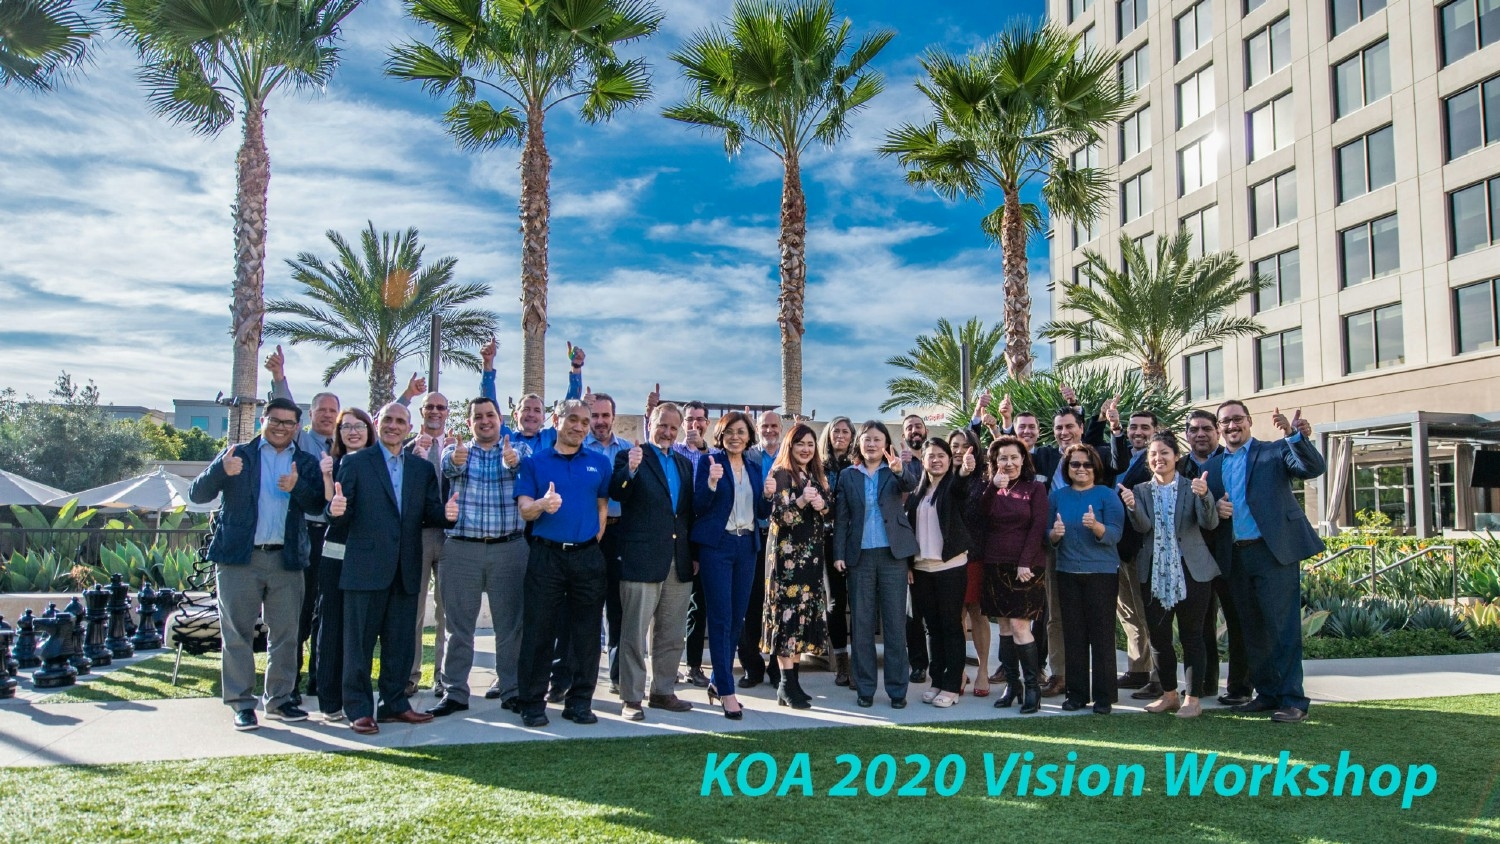 KOA's 2020 Vision Workshop, held at the beautiful Irvine Marriott